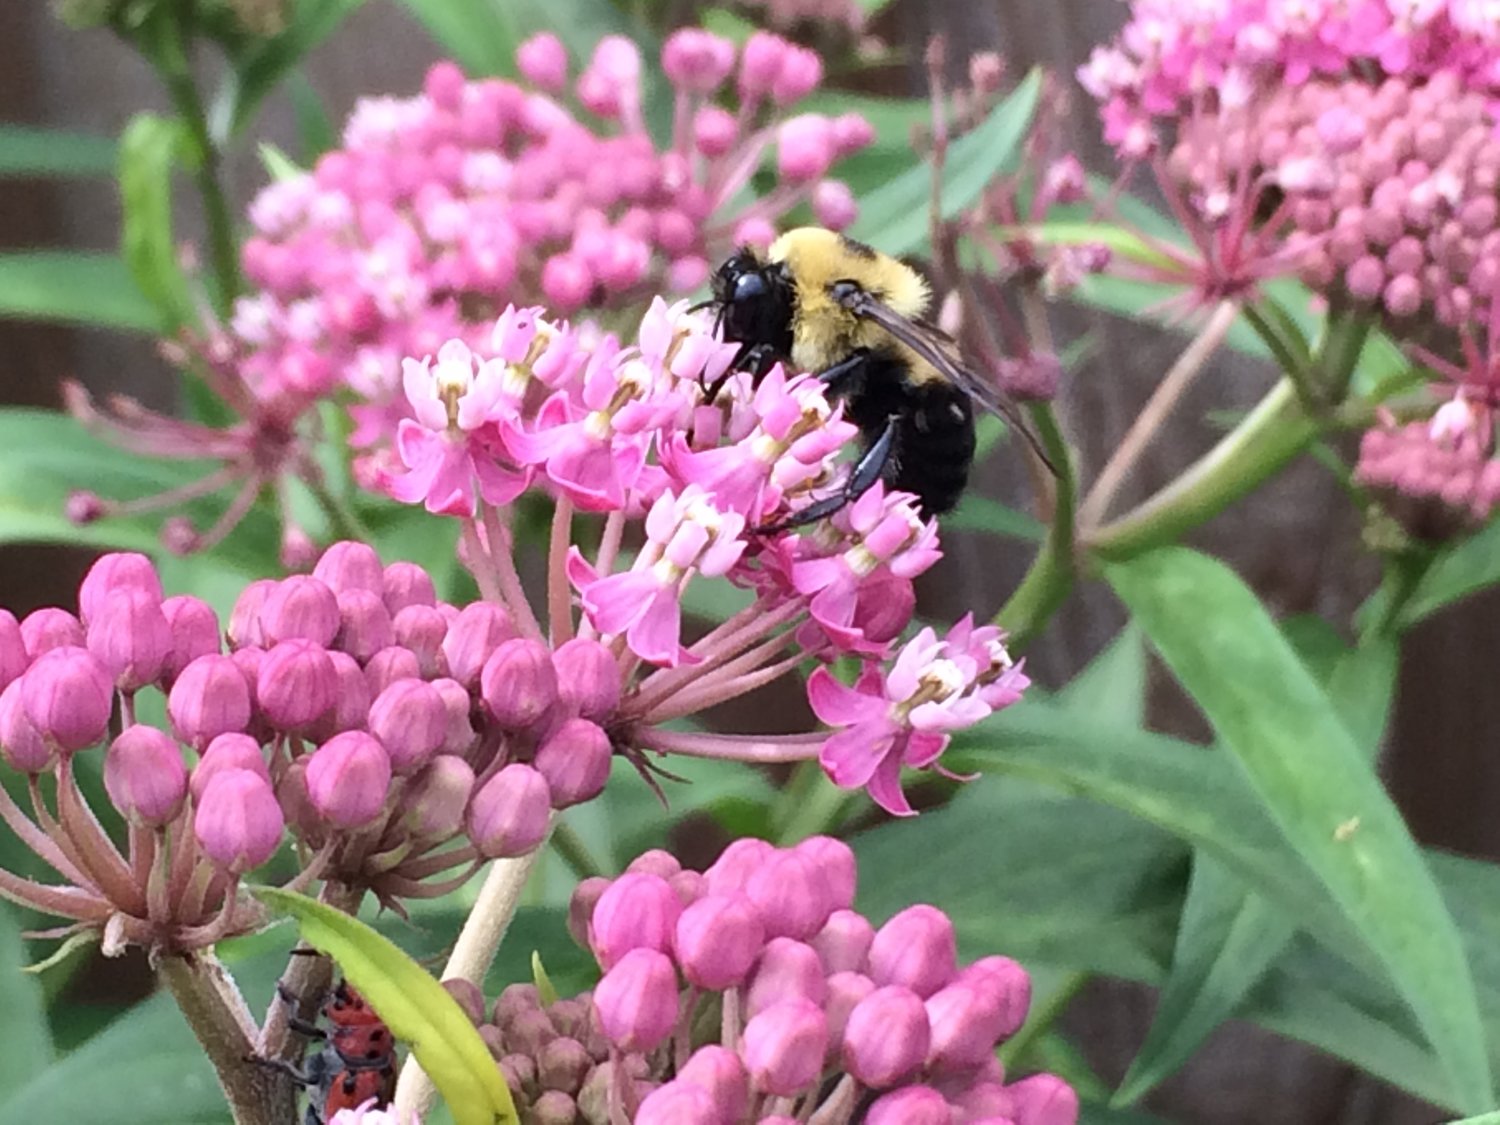 This bumblebee enjoys swamp milkweed.